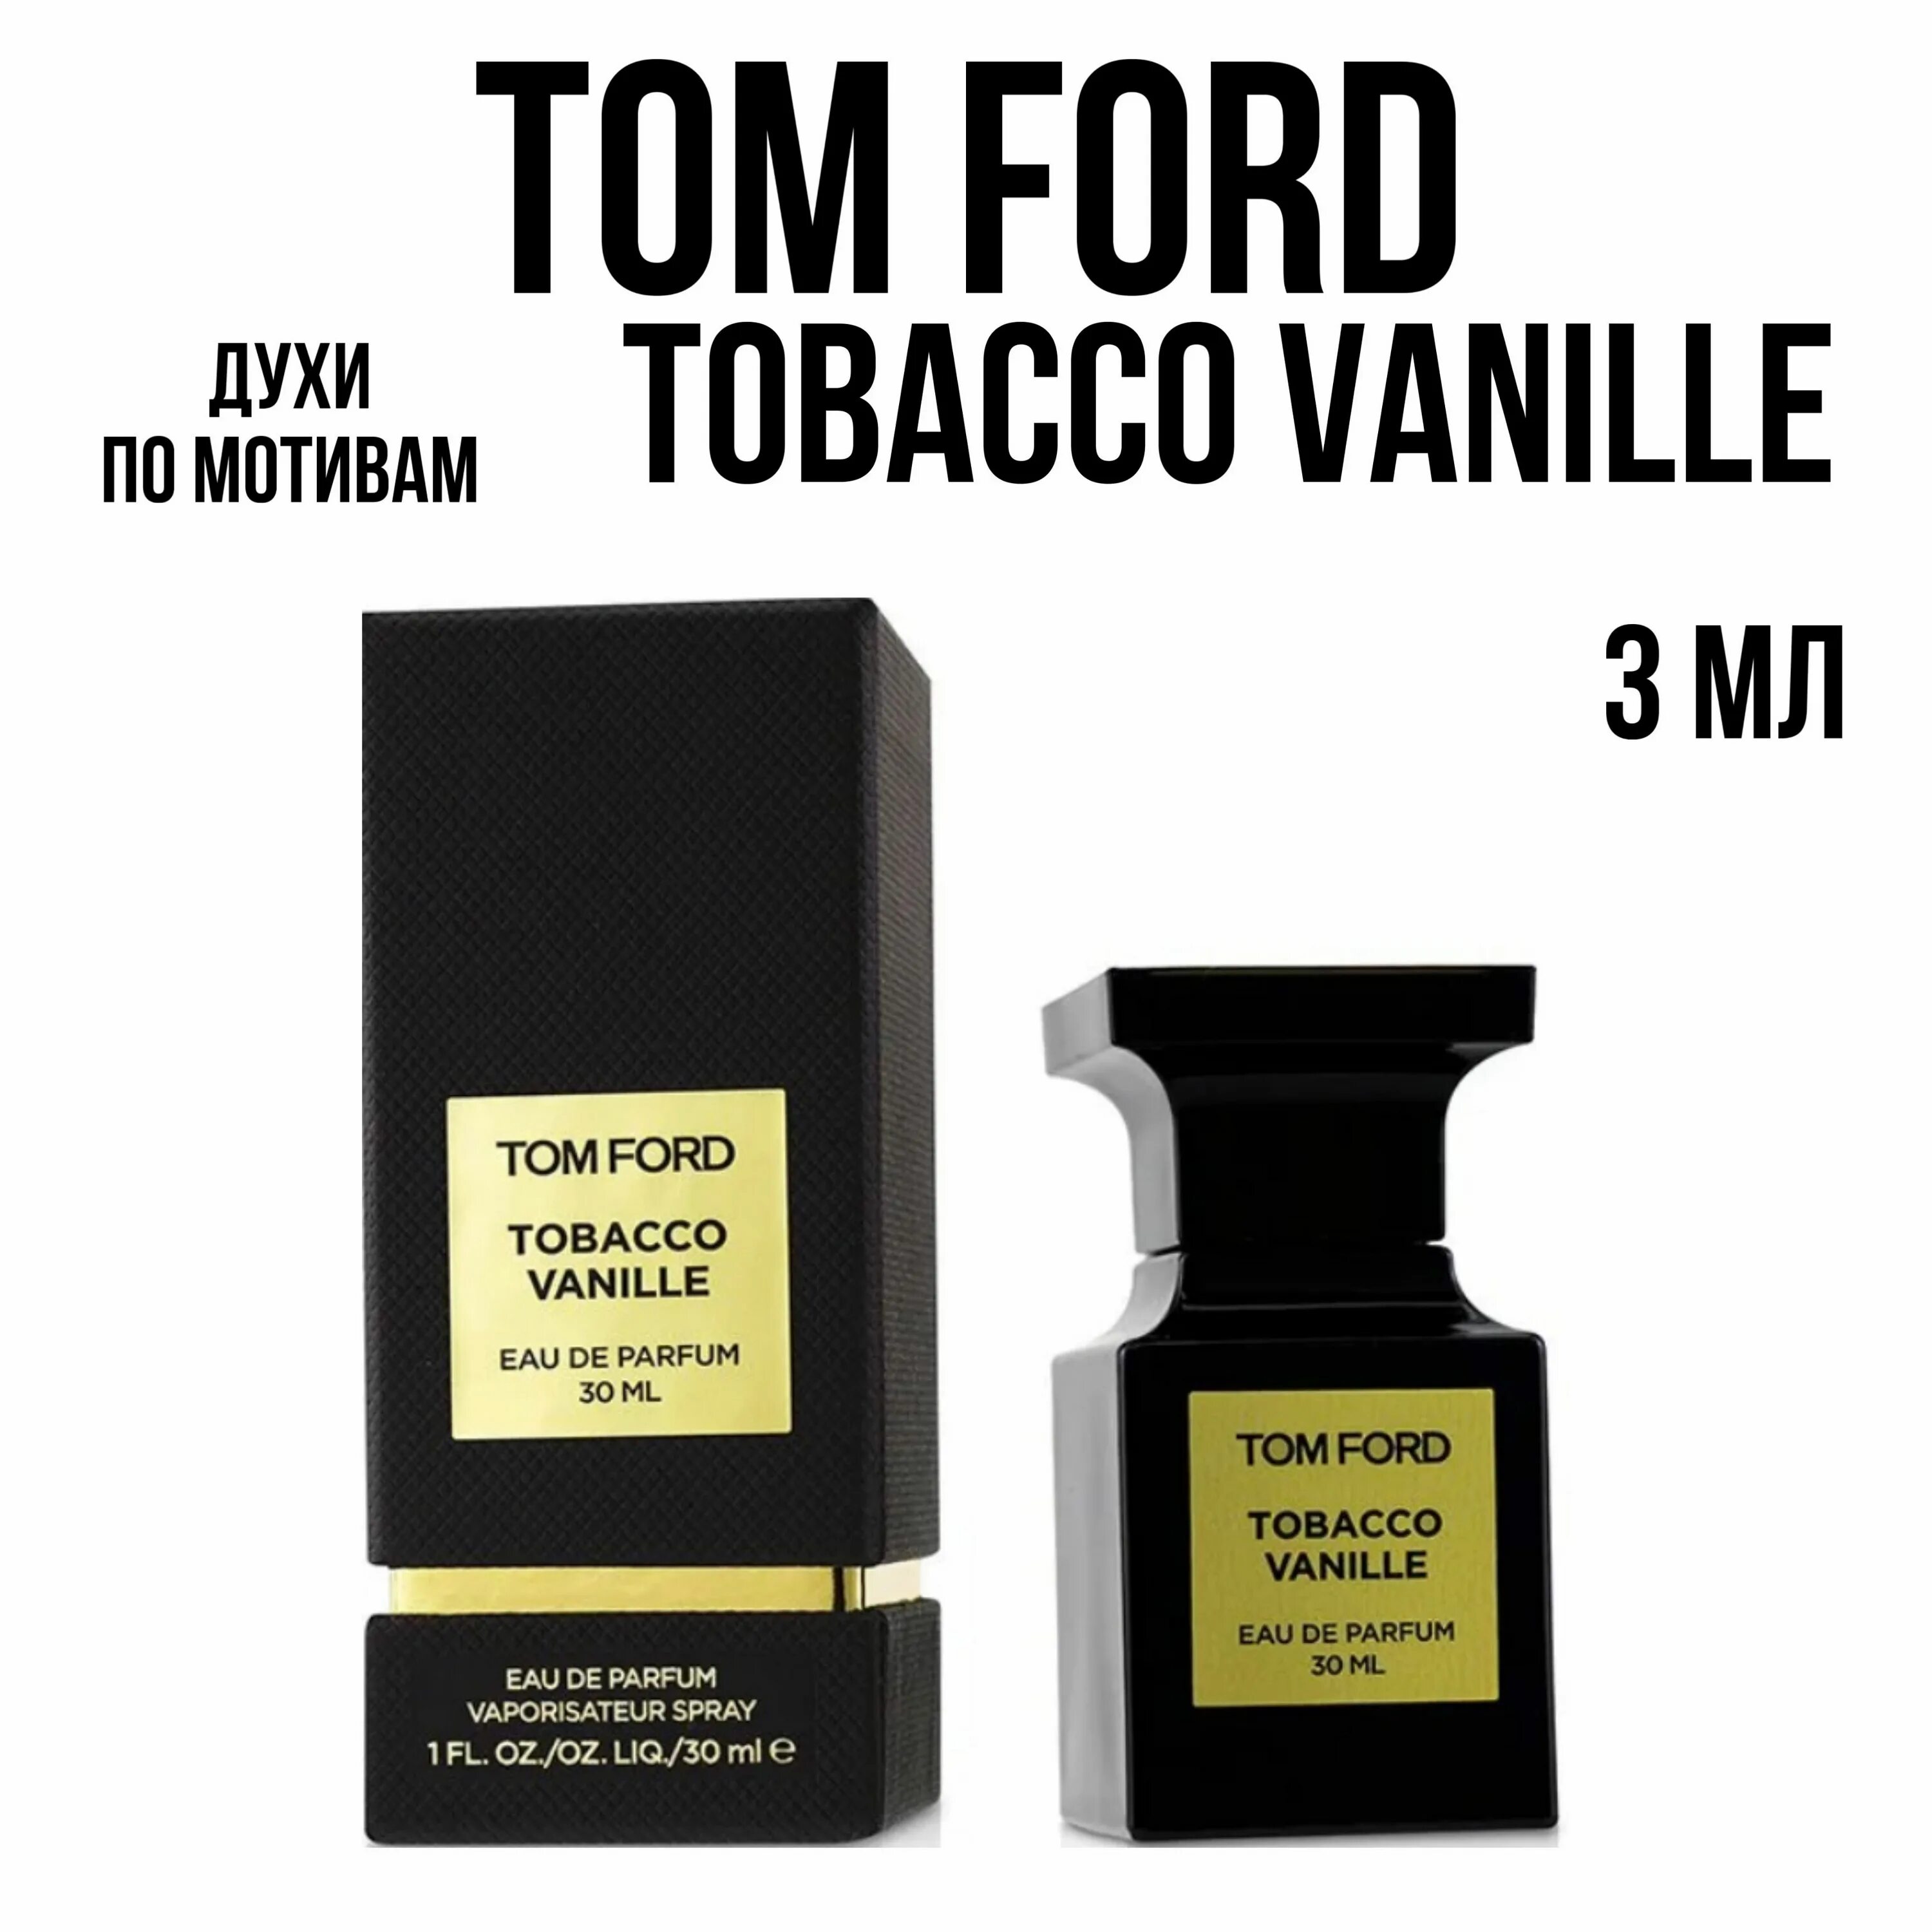 Tom Ford Tobacco Vanille 100ml. Tom Ford Tobacco Vanille. Tom Ford Tobacco Vanille мужской. Tom Ford Tobacco Vanille 30ml.